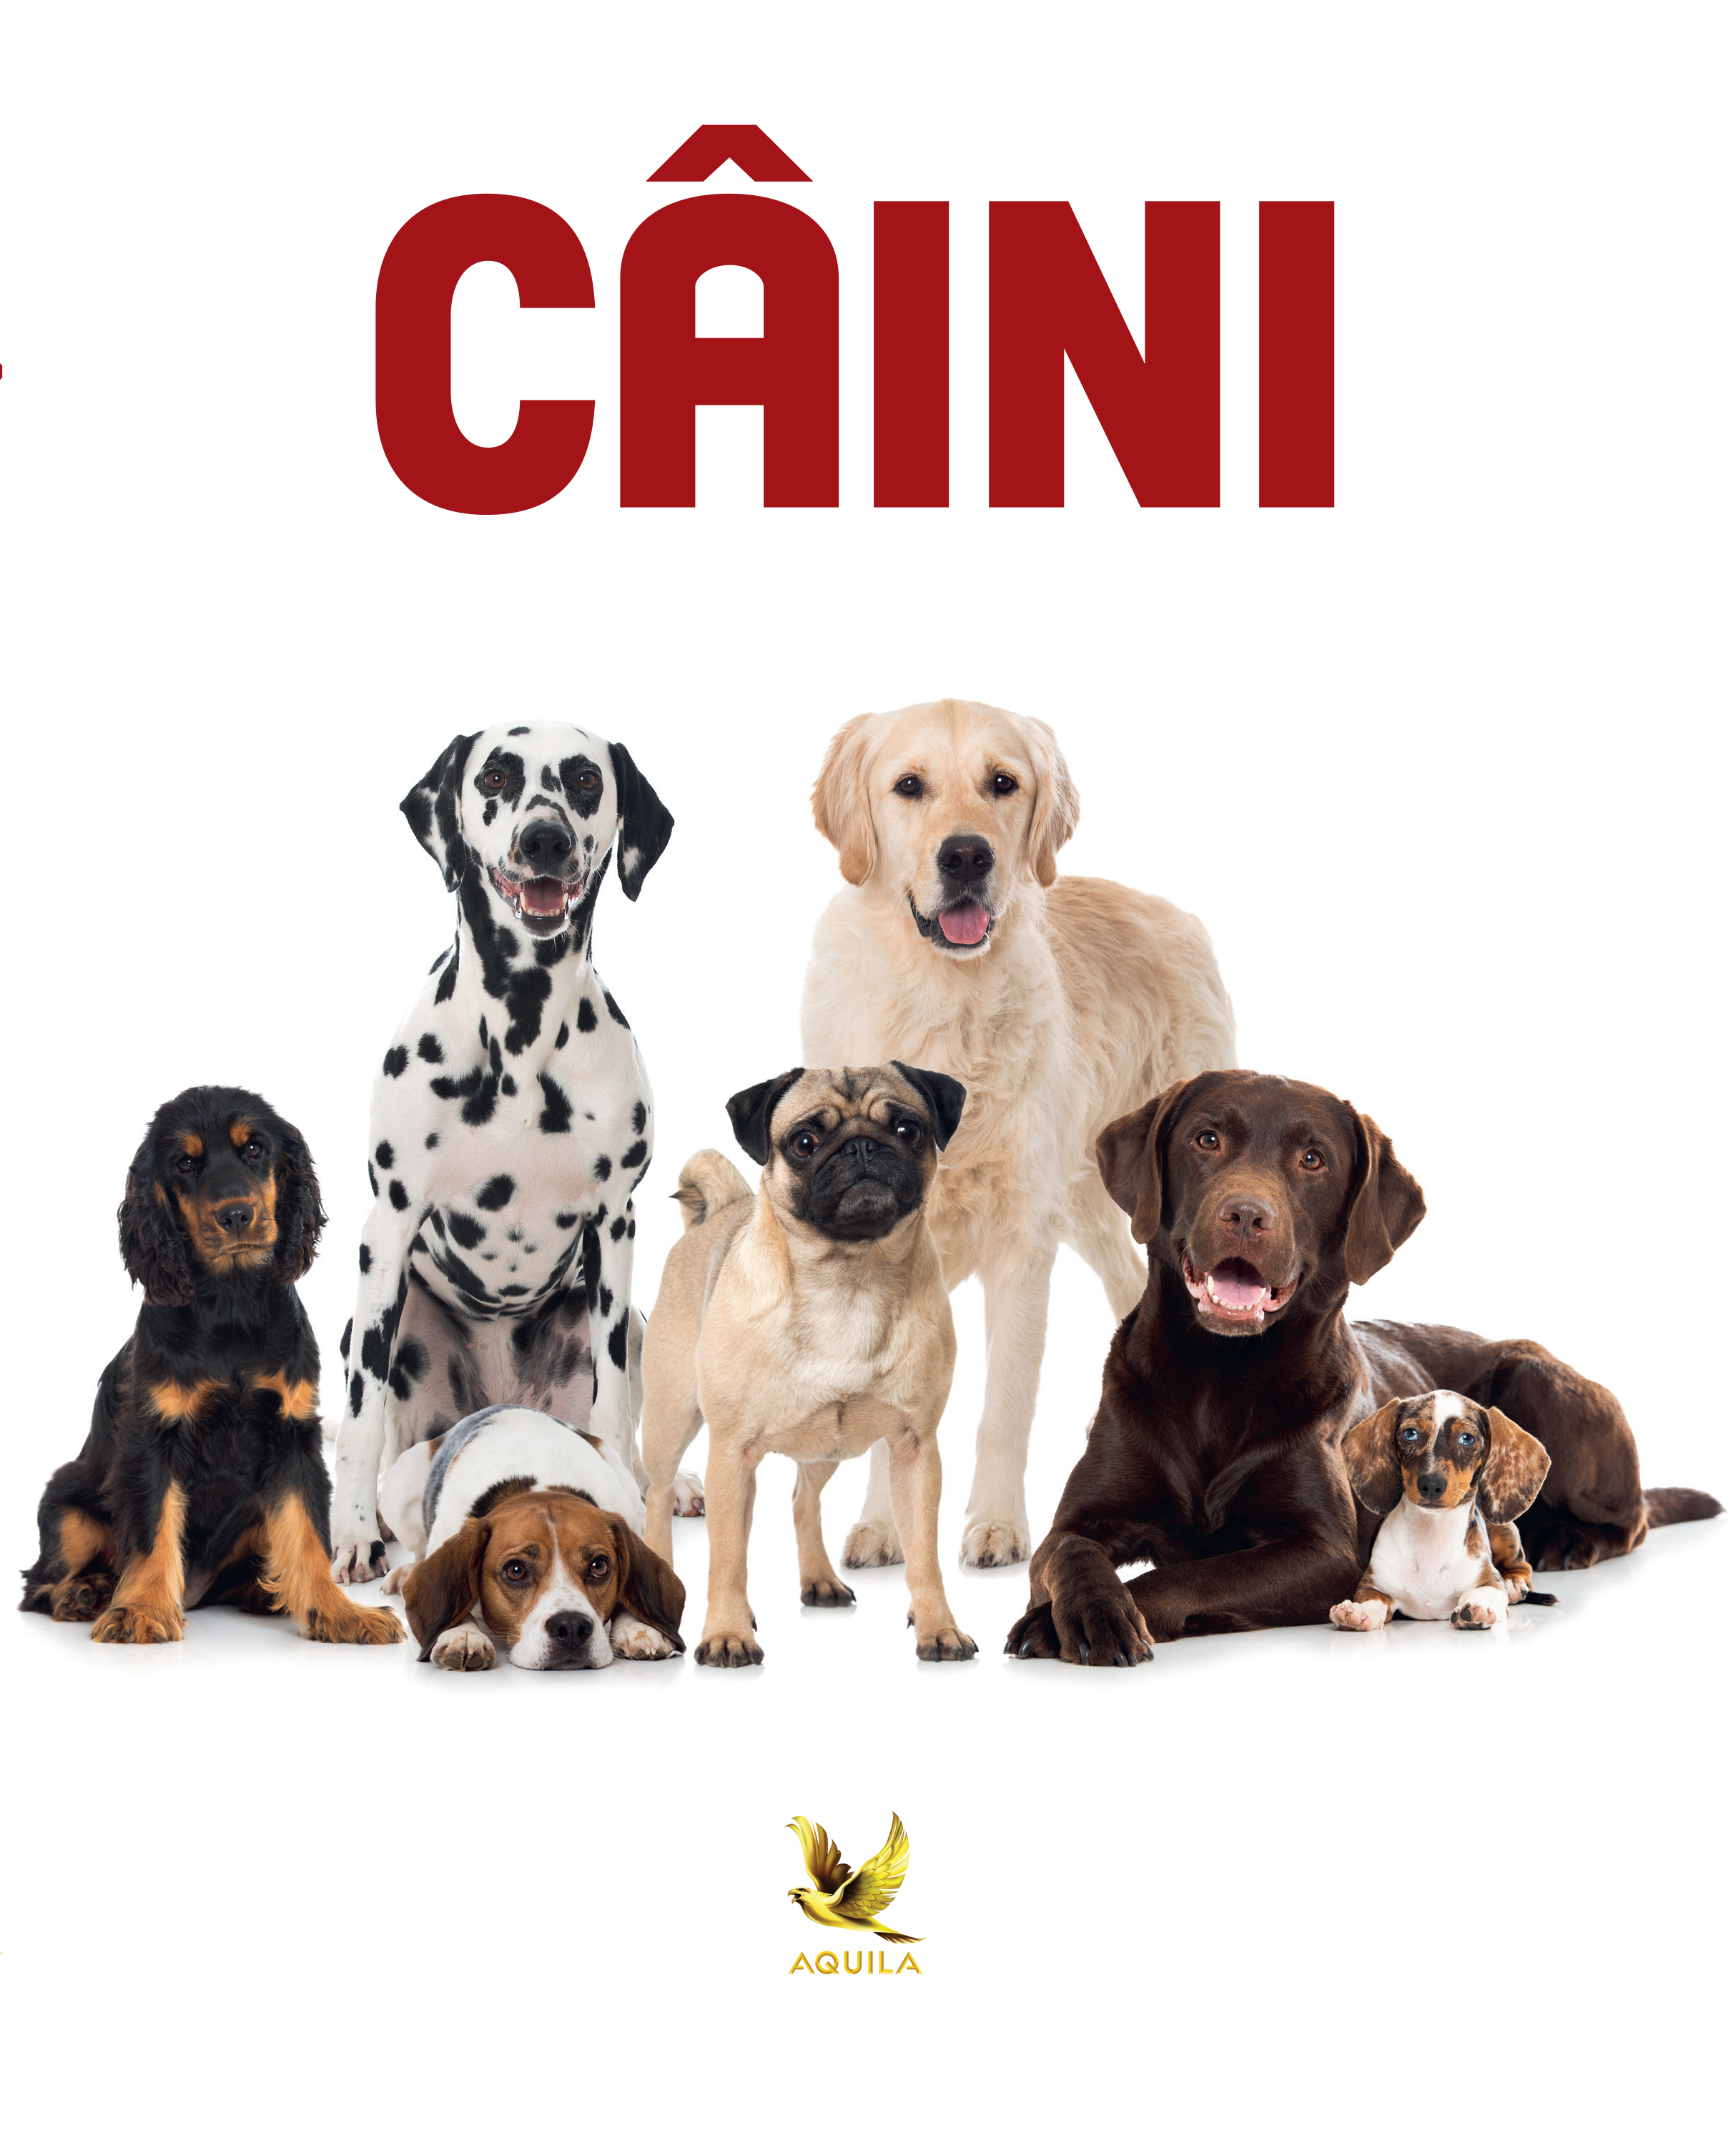 Caini | Aquila poza bestsellers.ro